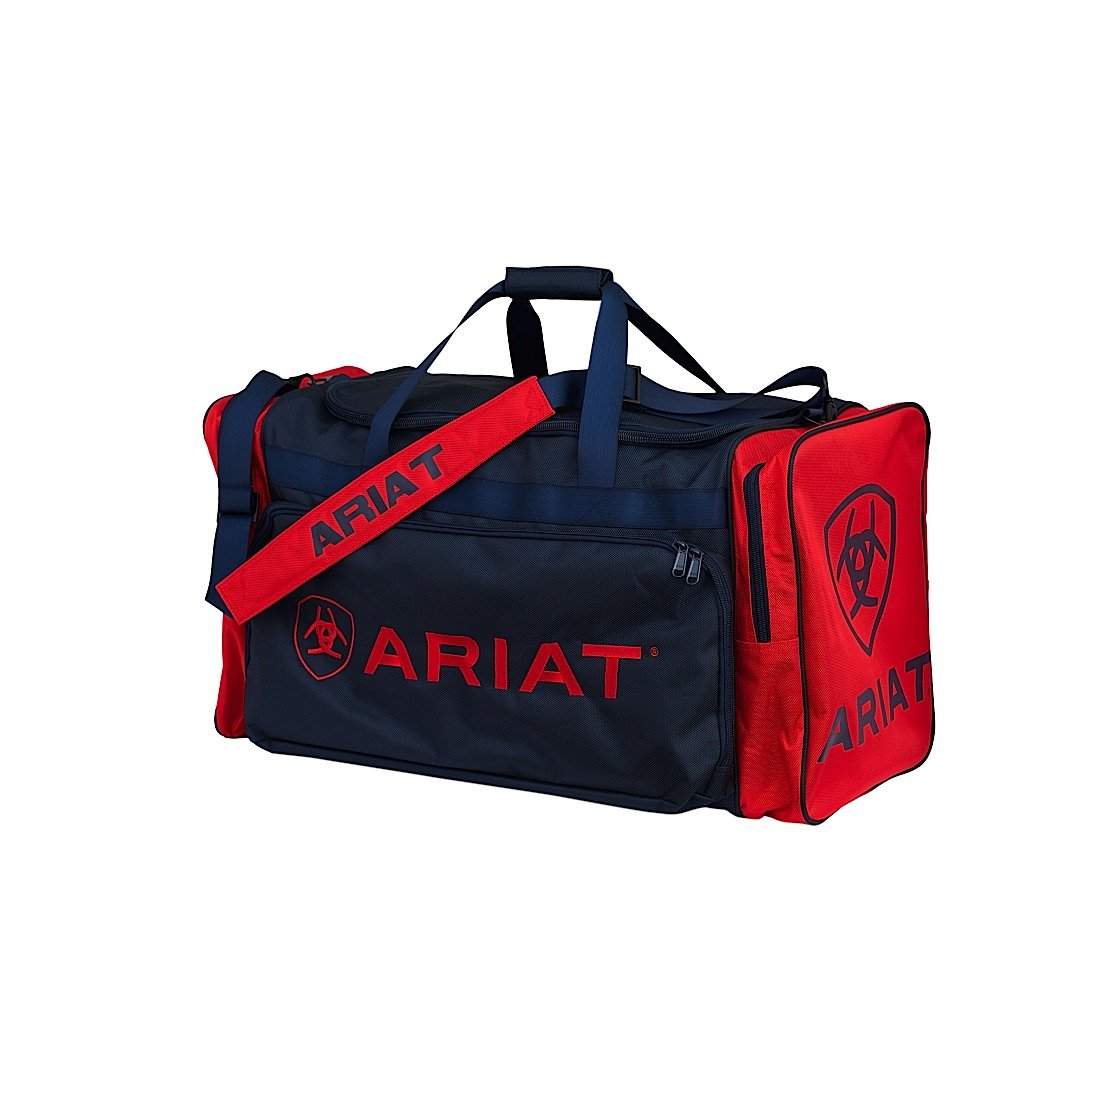 Ariat Jnr Gear Bag